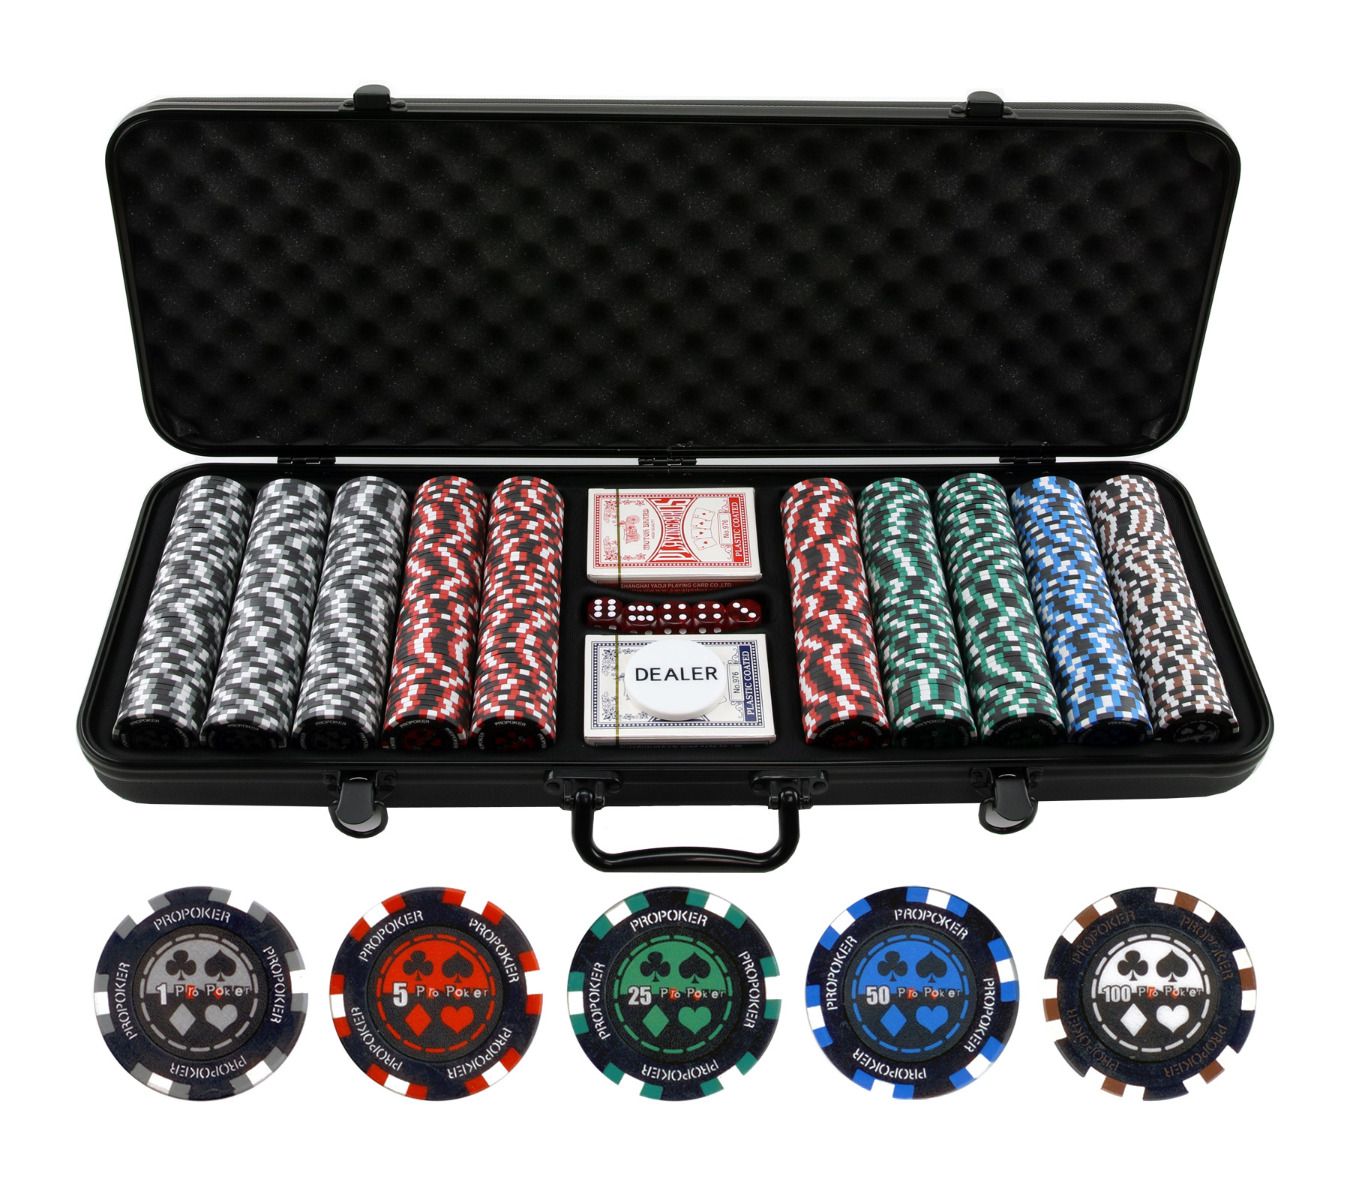 Diktat legation stramt 500pc Pro Poker 13.5g Clay Poker Chips Set from Discount Poker Shop